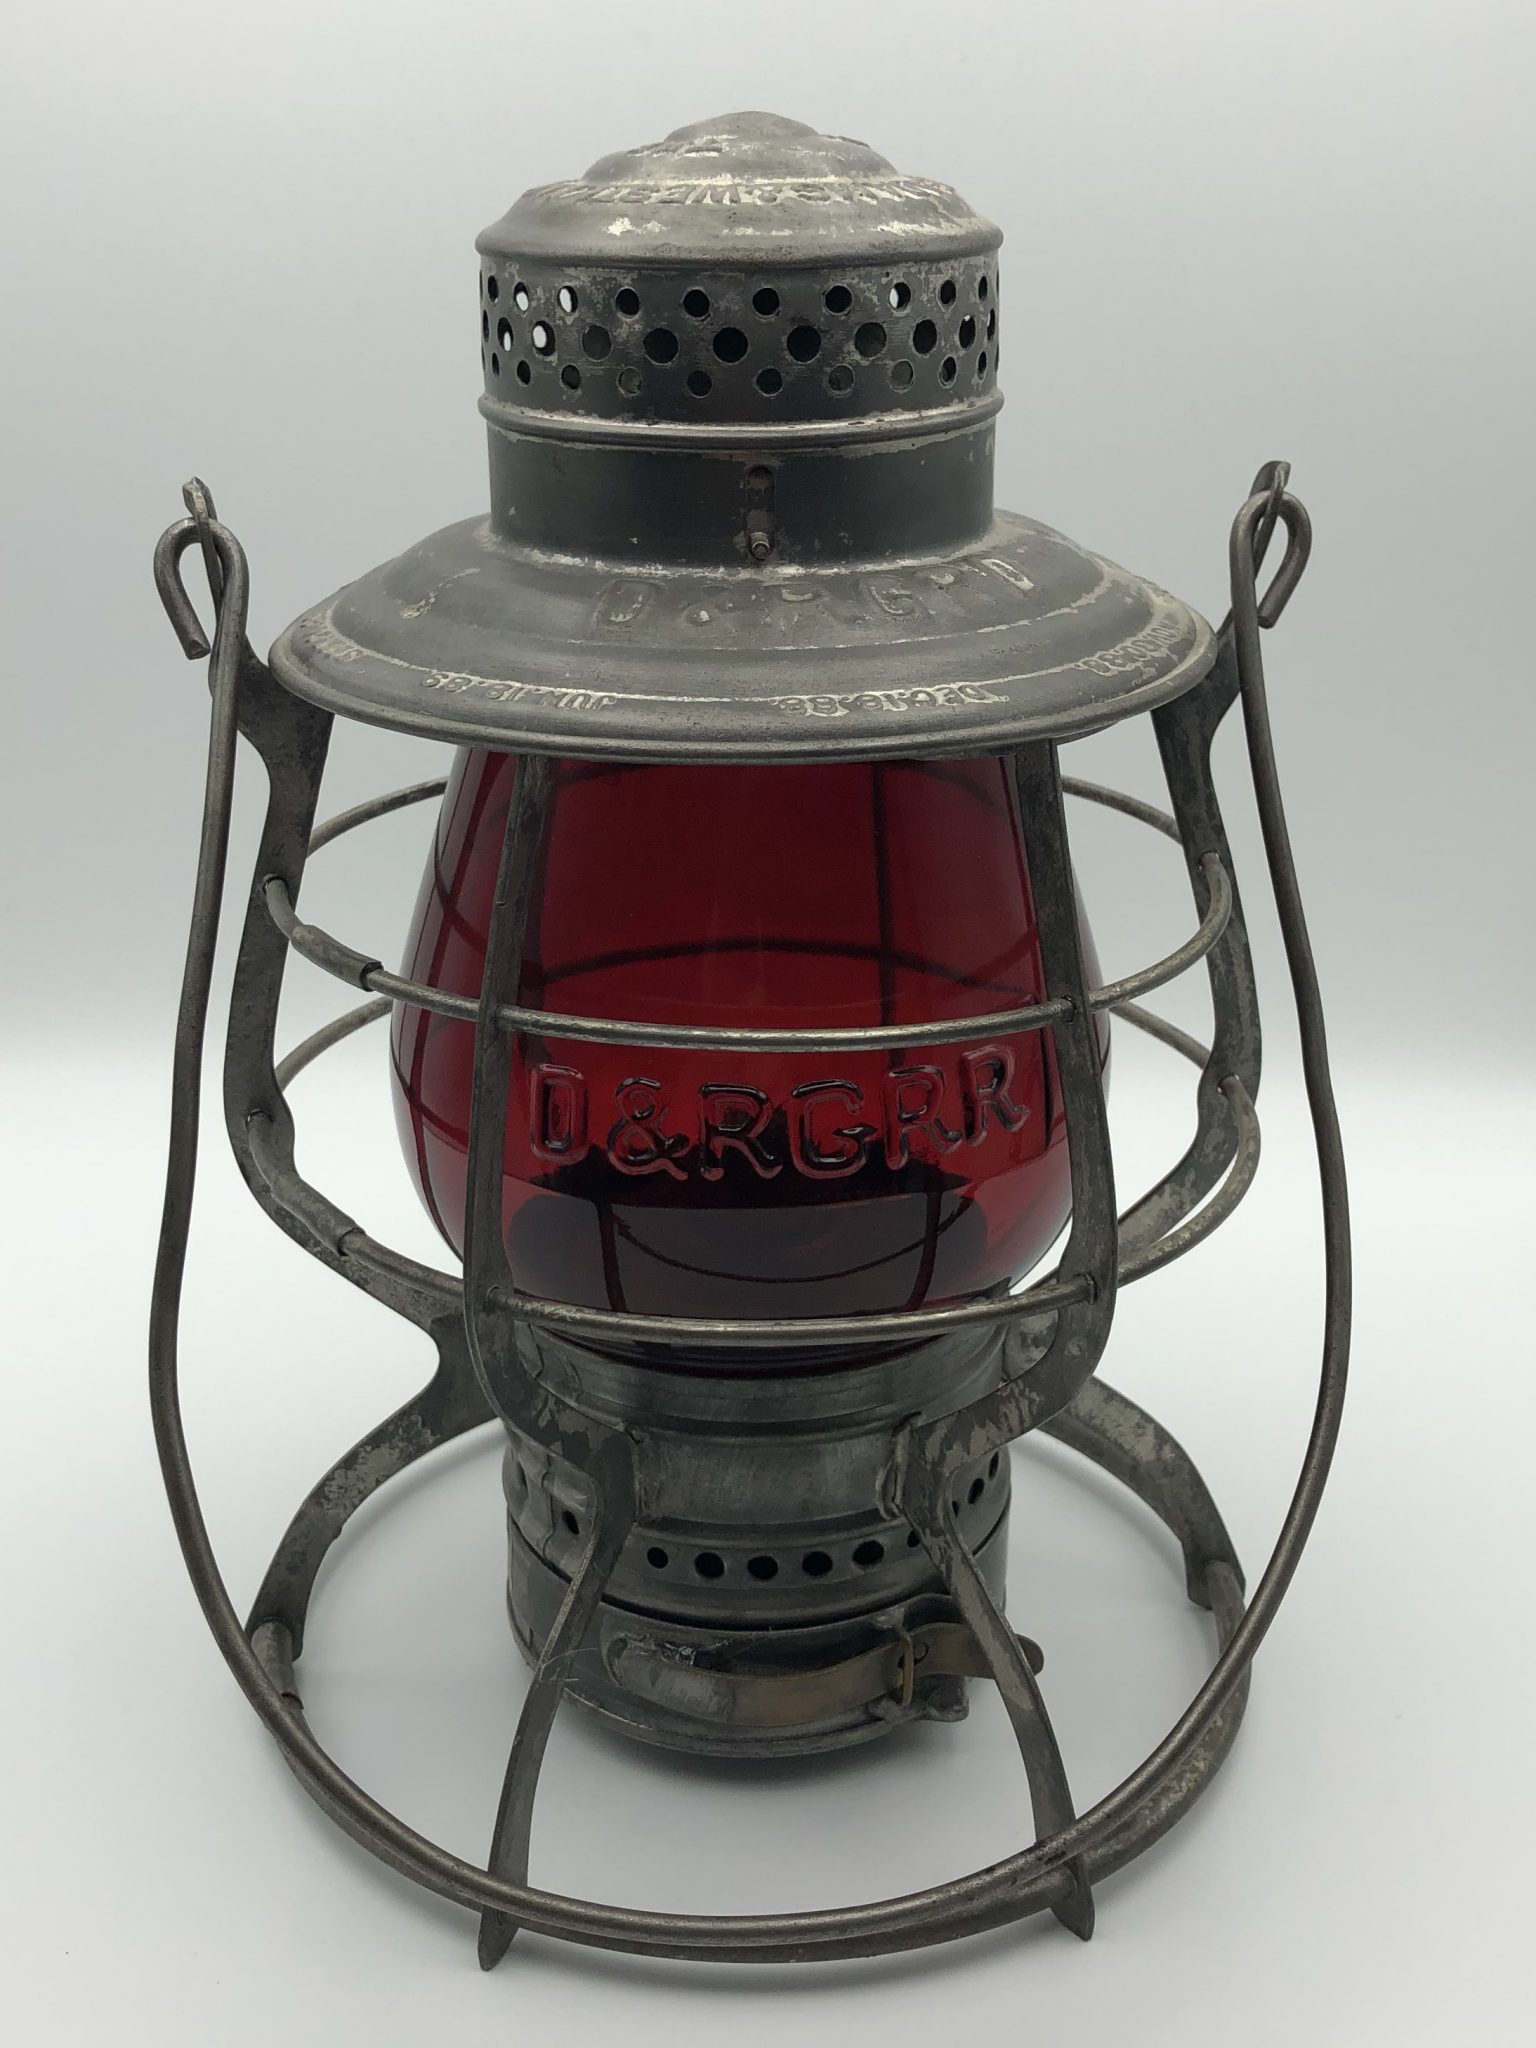 D&RGRD Railroad Lantern